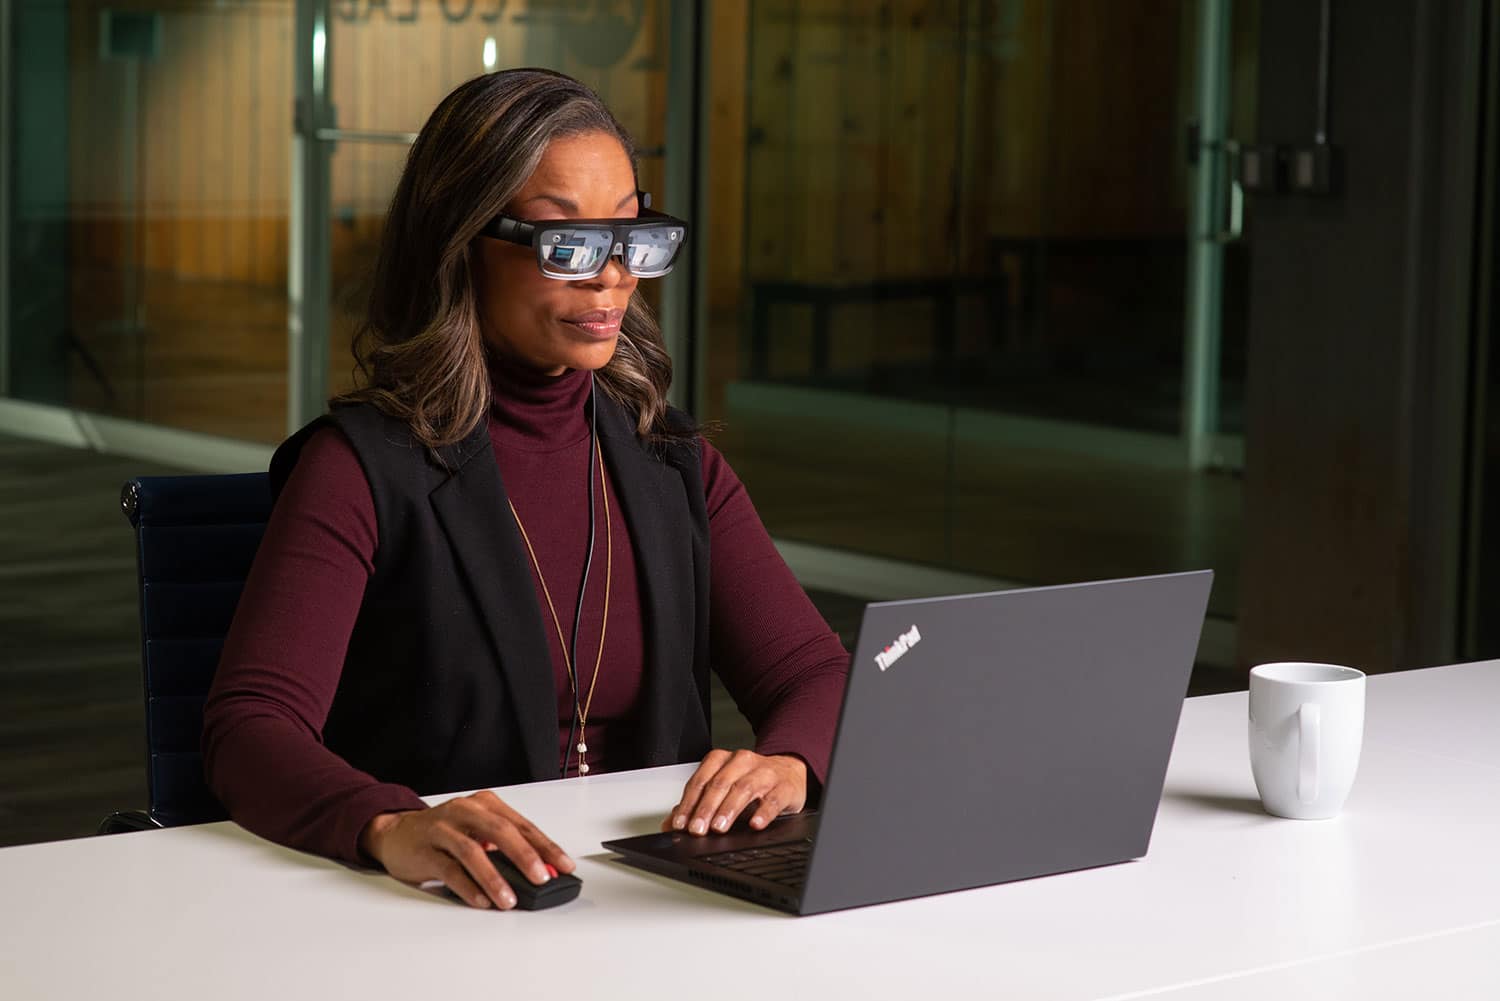 Lenovo ThinkReality A3 smartglasses enhance productivity for the office professional.